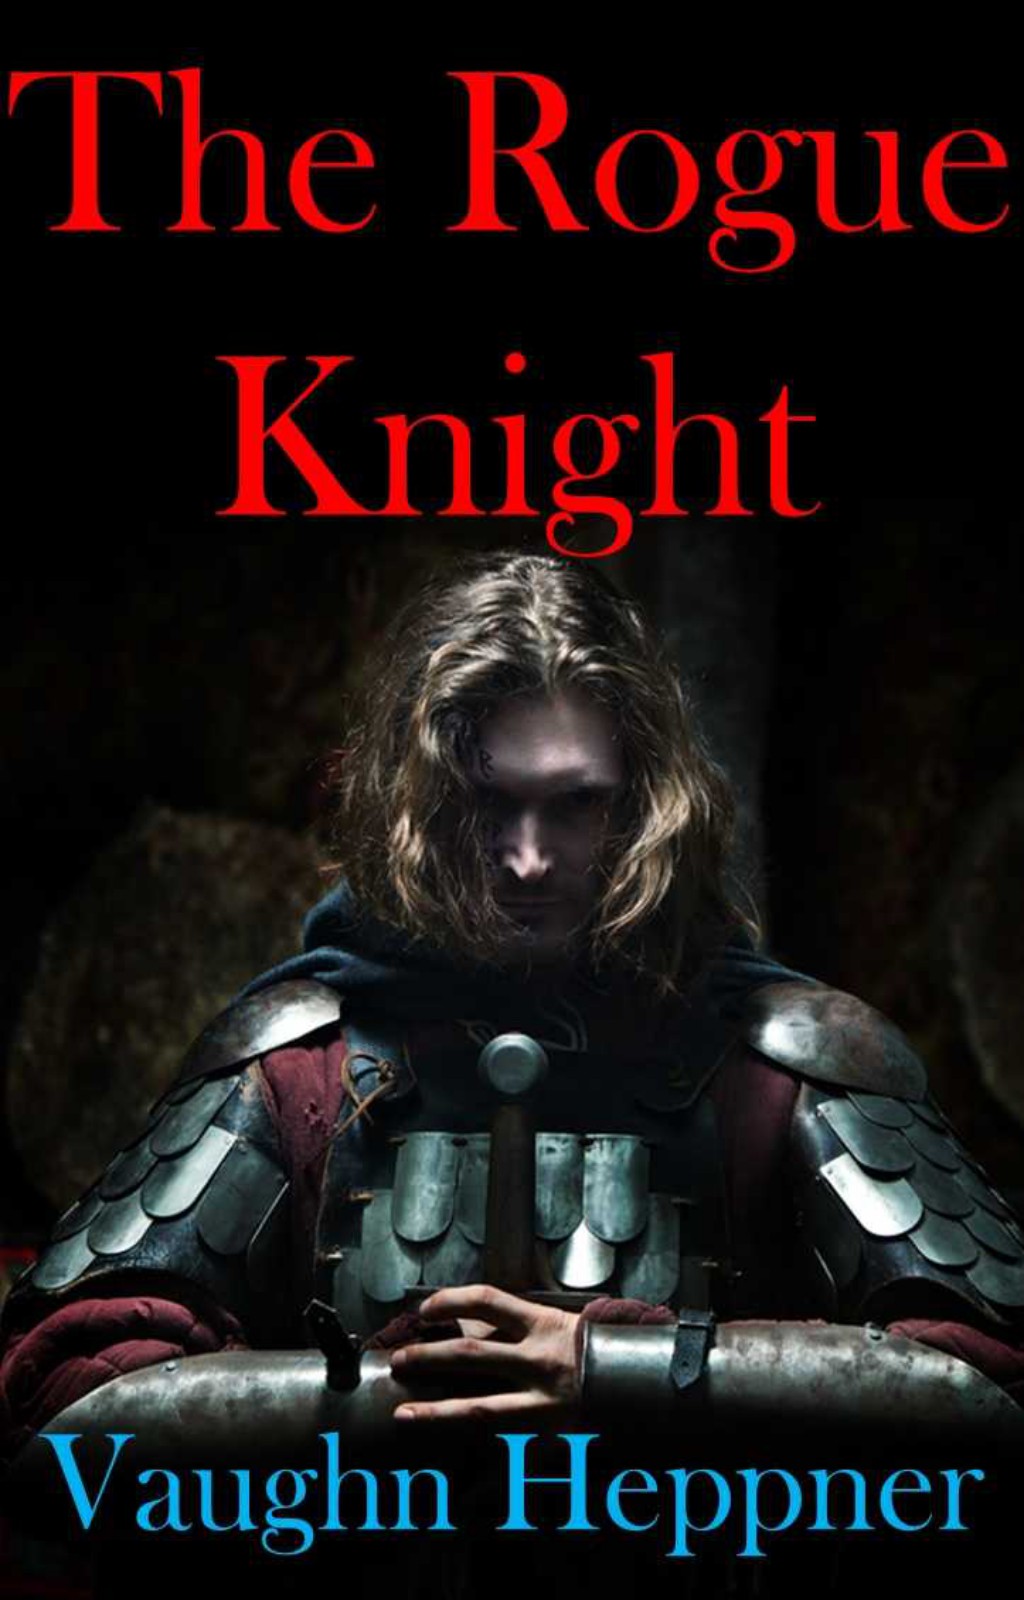 The Rogue Knight by Vaughn Heppner